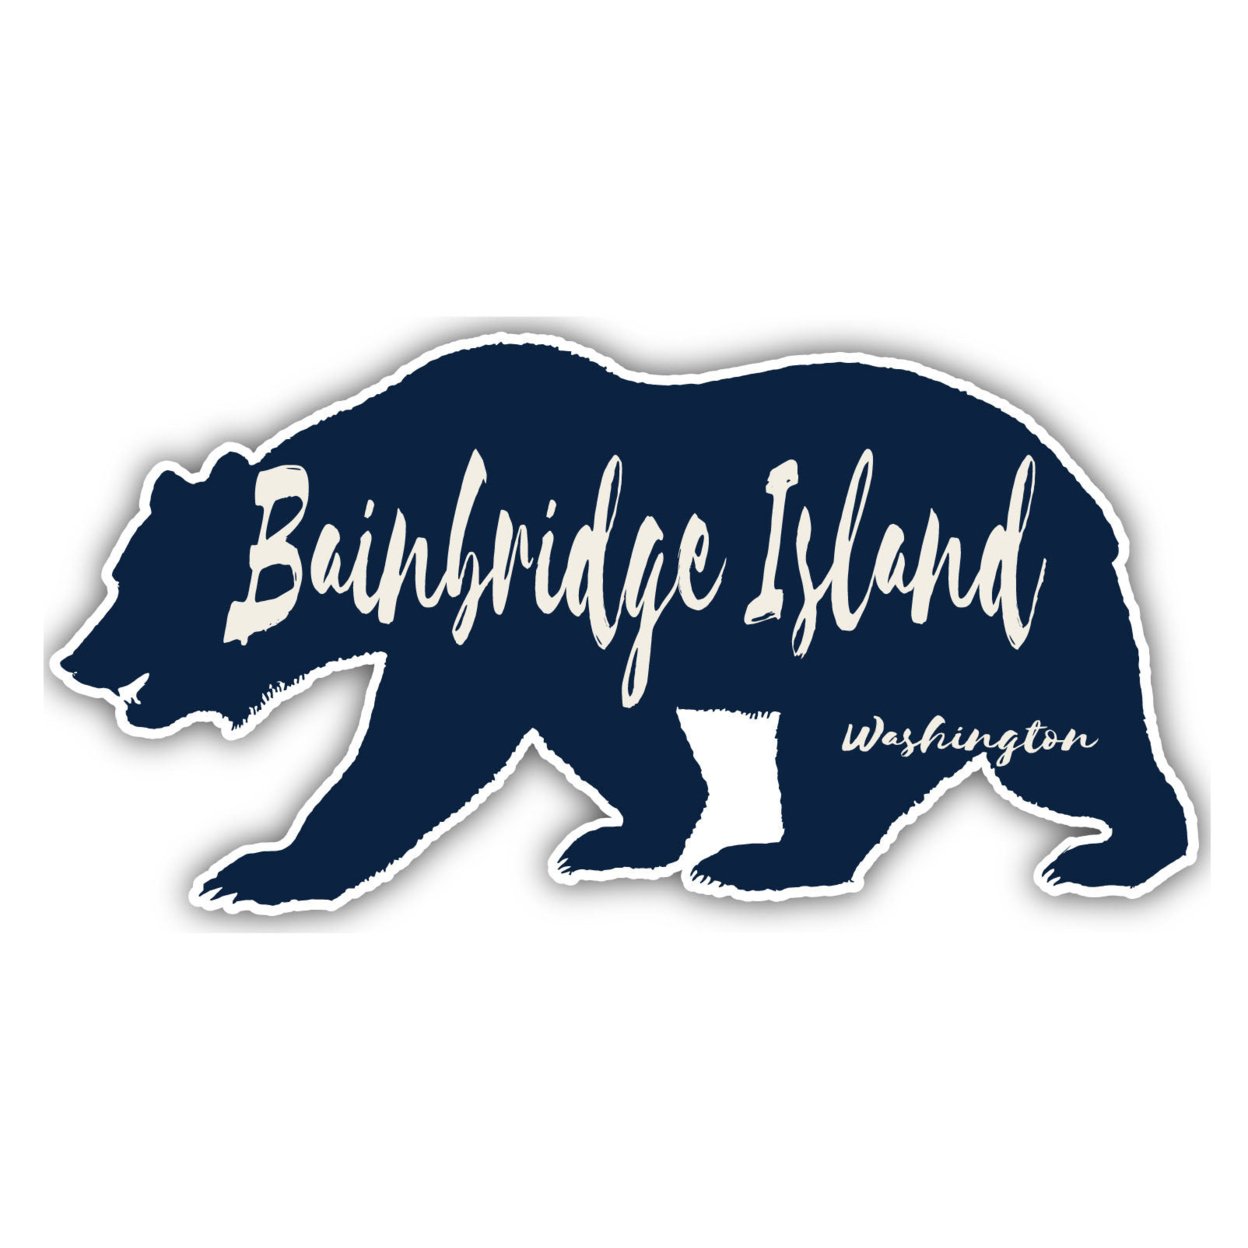 Bainbridge Island Washington Souvenir Decorative Stickers (Choose Theme And Size) - Single Unit, 4-Inch, Bear